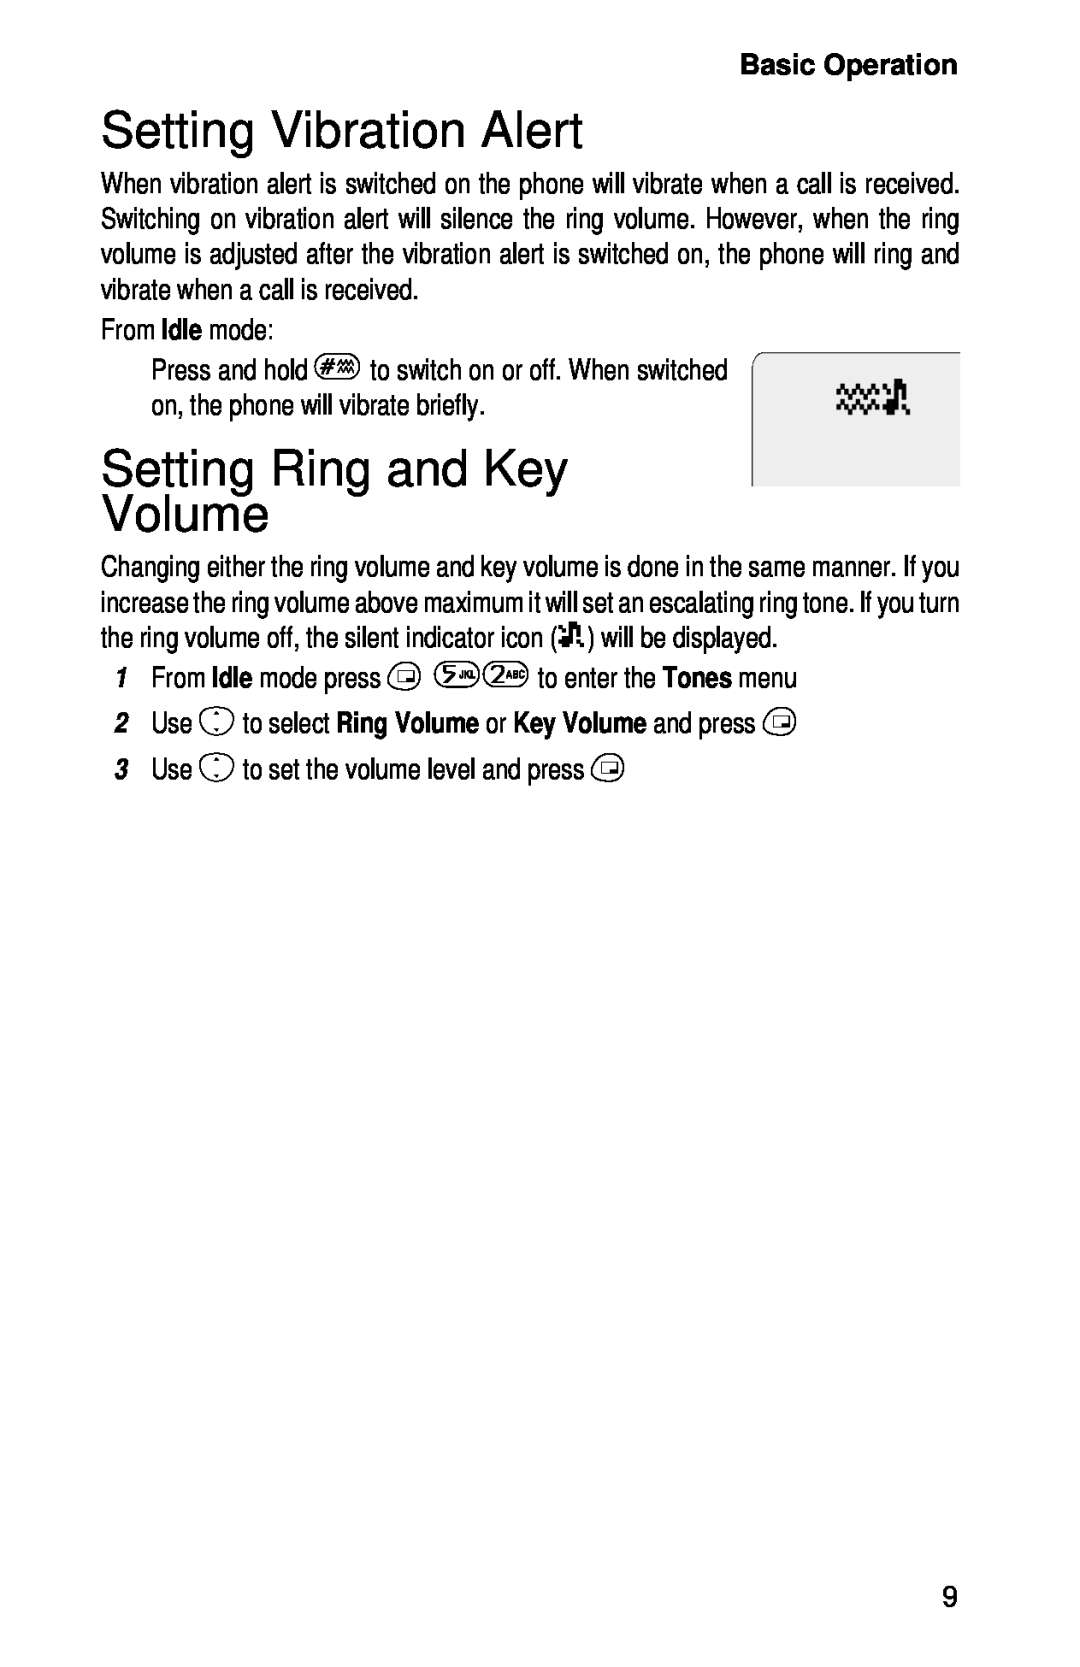 Panasonic EB-GD52 Setting Vibration Alert, Setting Ring and Key Volume, Basic Operation, From Idle mode 